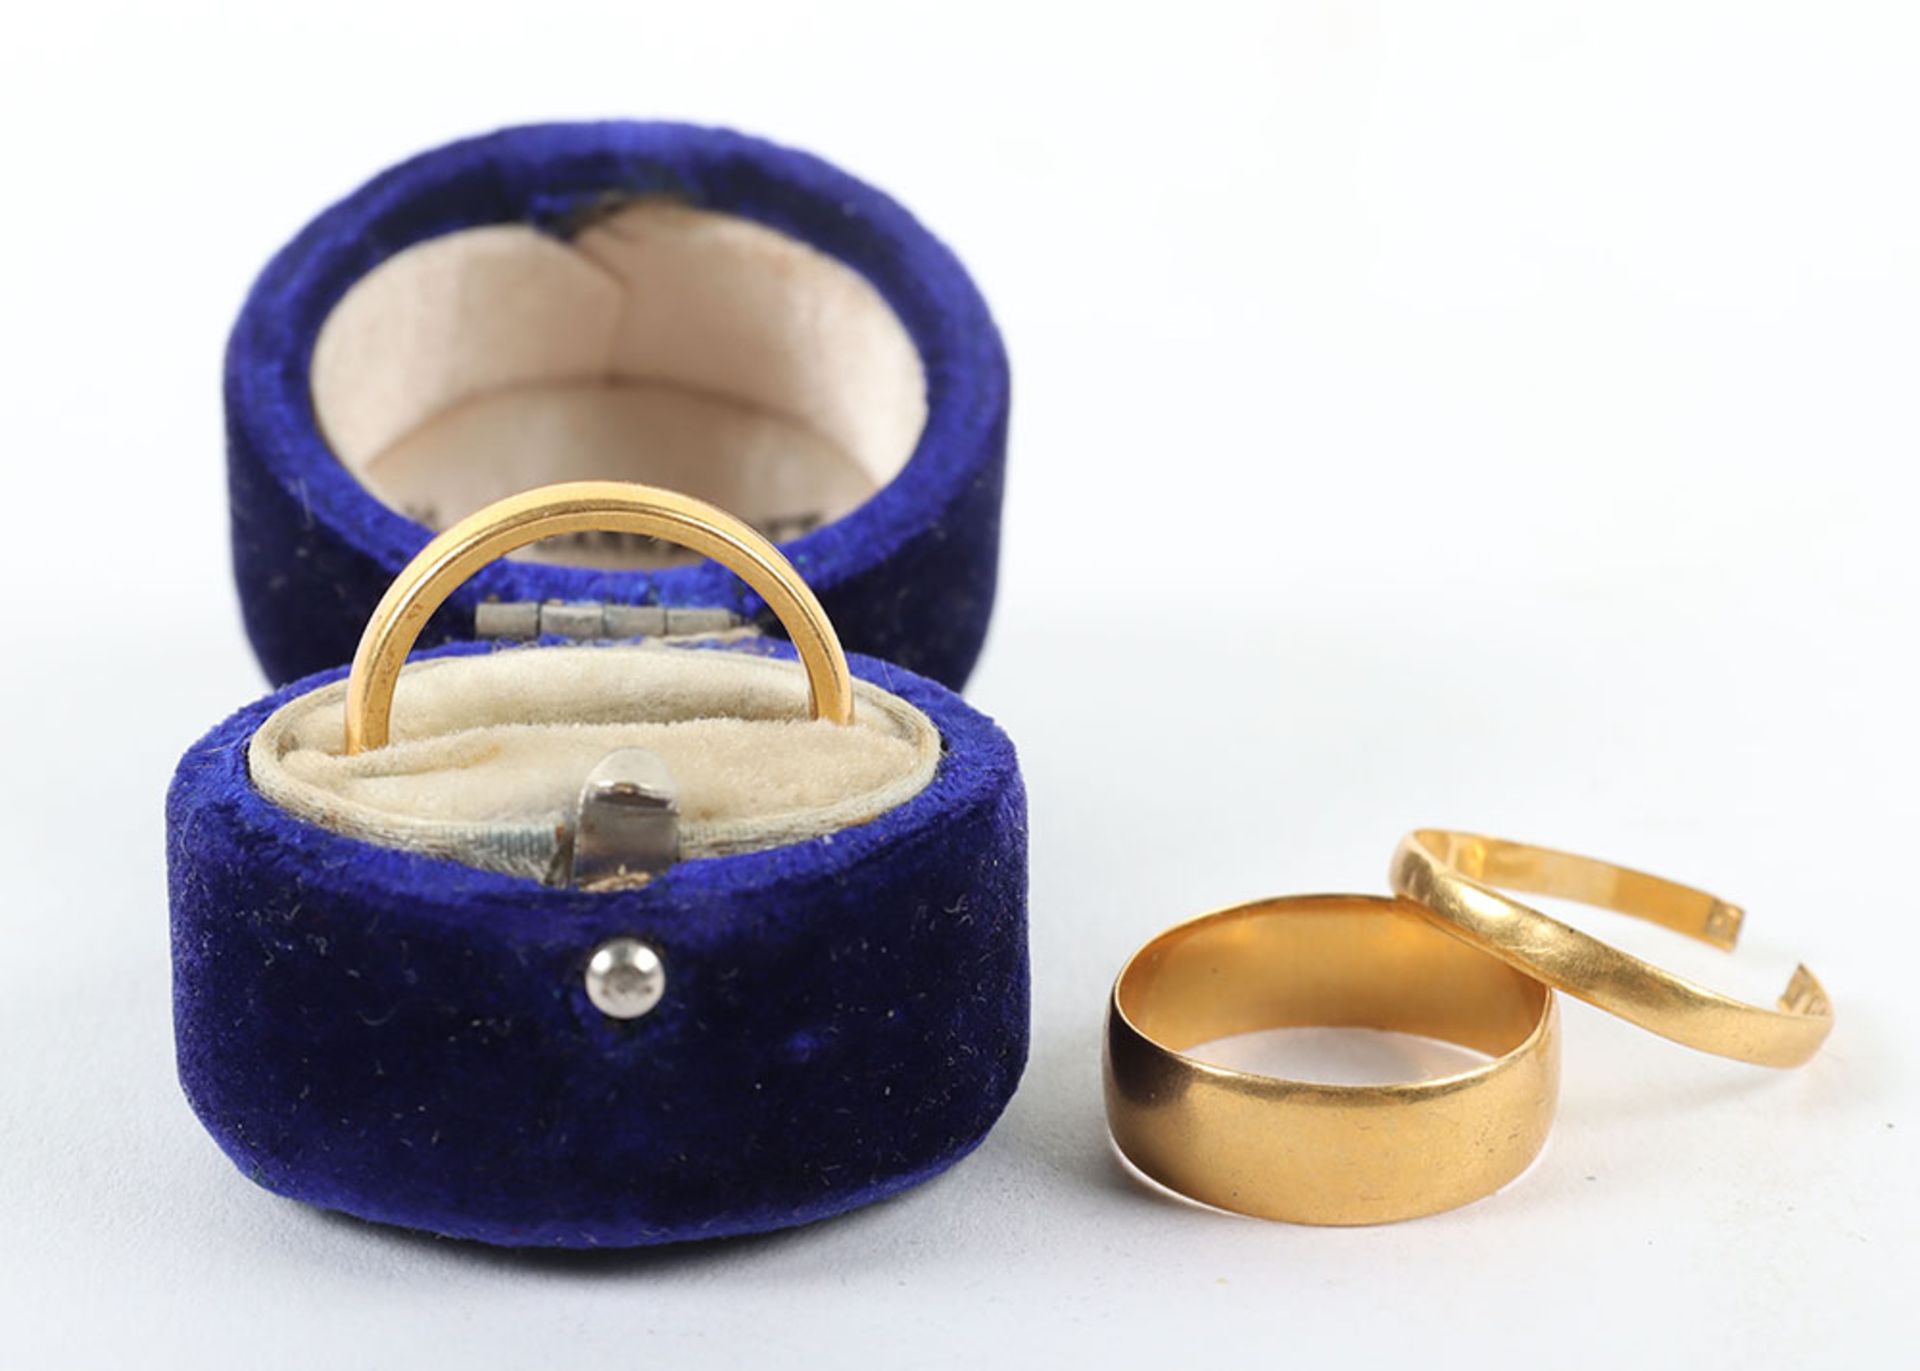 Three 22ct gold wedding rings - Image 2 of 3